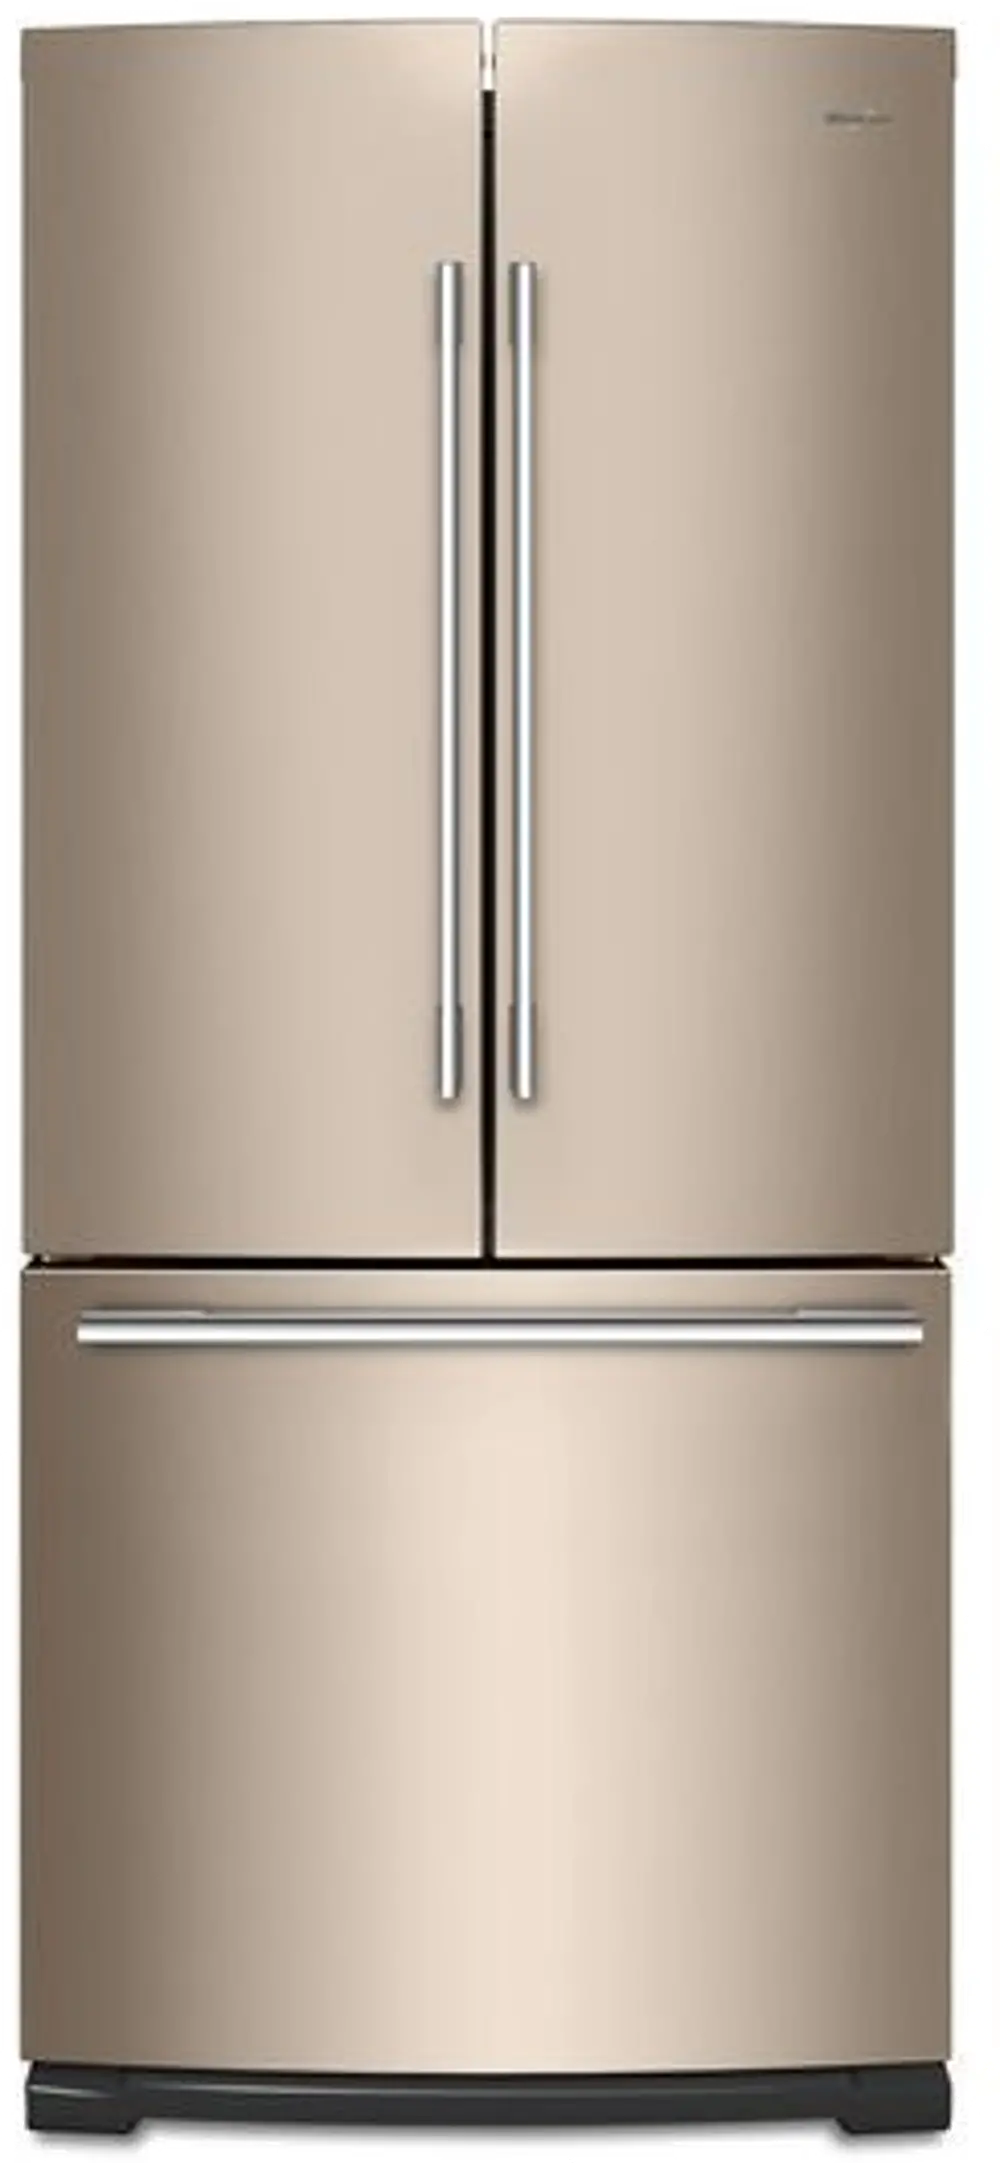 WRFA60SMHN Whirlpool French Door Refrigerator - 30 Inch Sunset Bronze-1